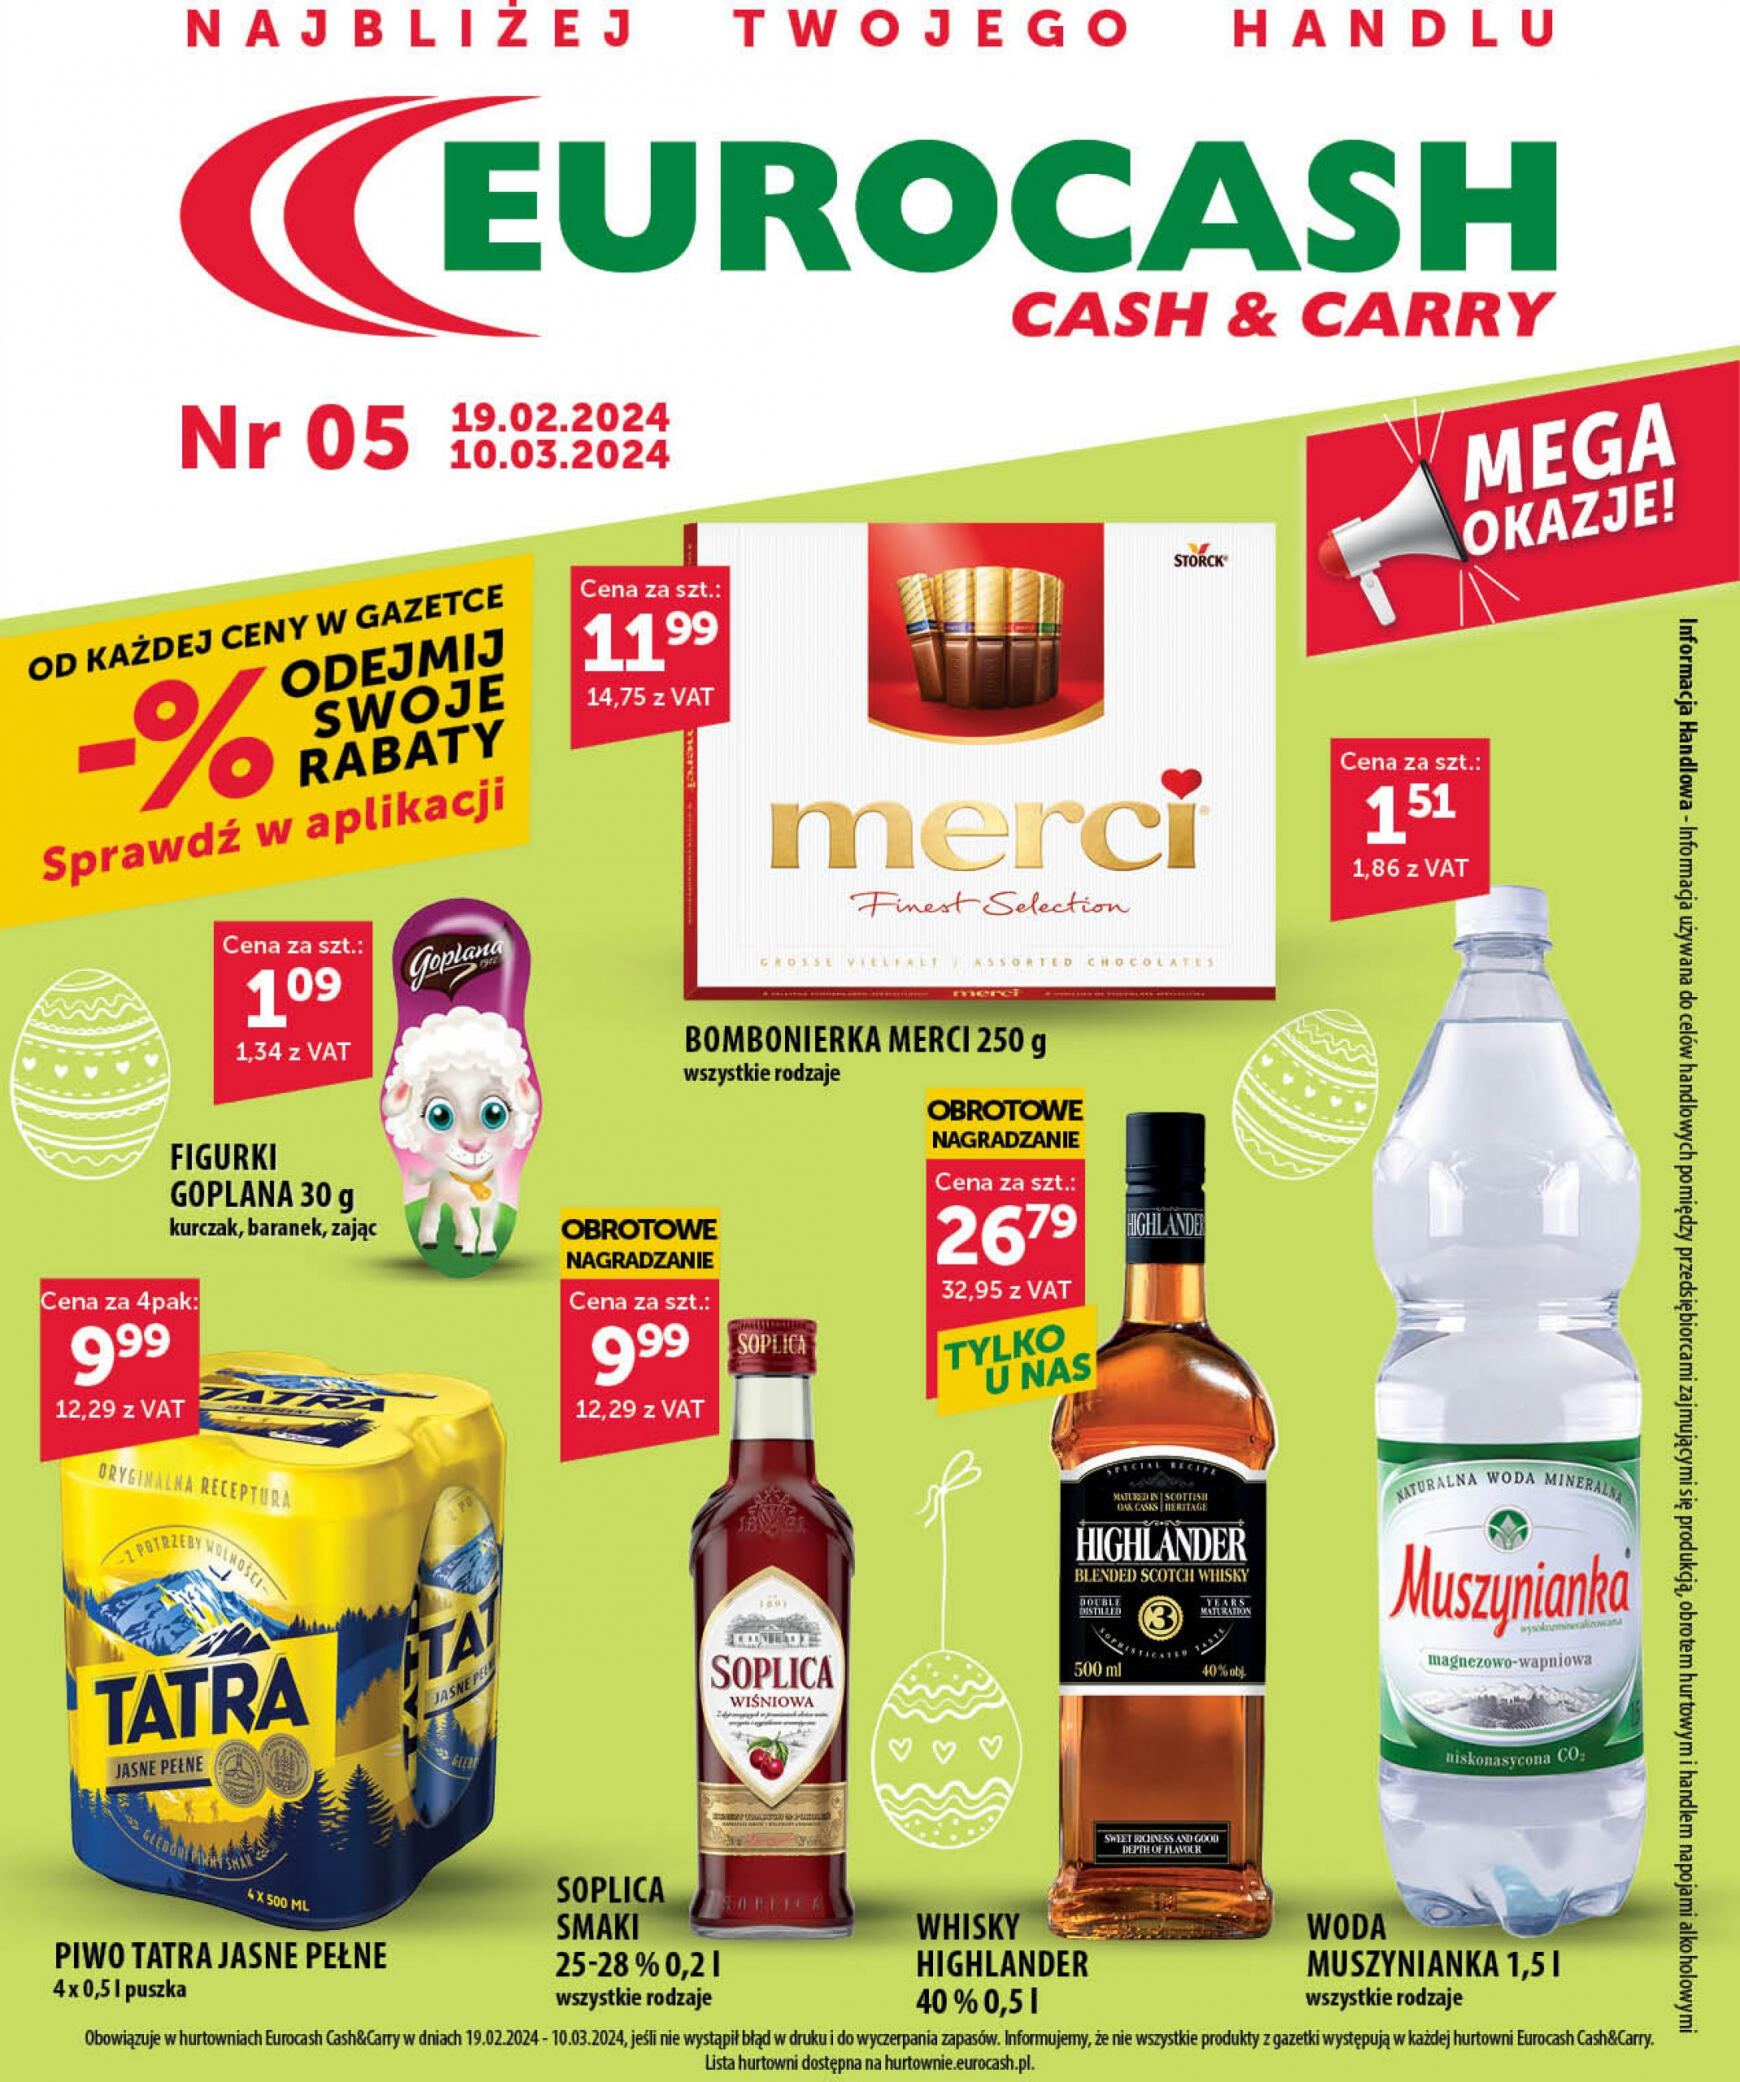 eurocash - Eurocash - Gazetka Cash&Carry obowiązuje od 19.02.2024